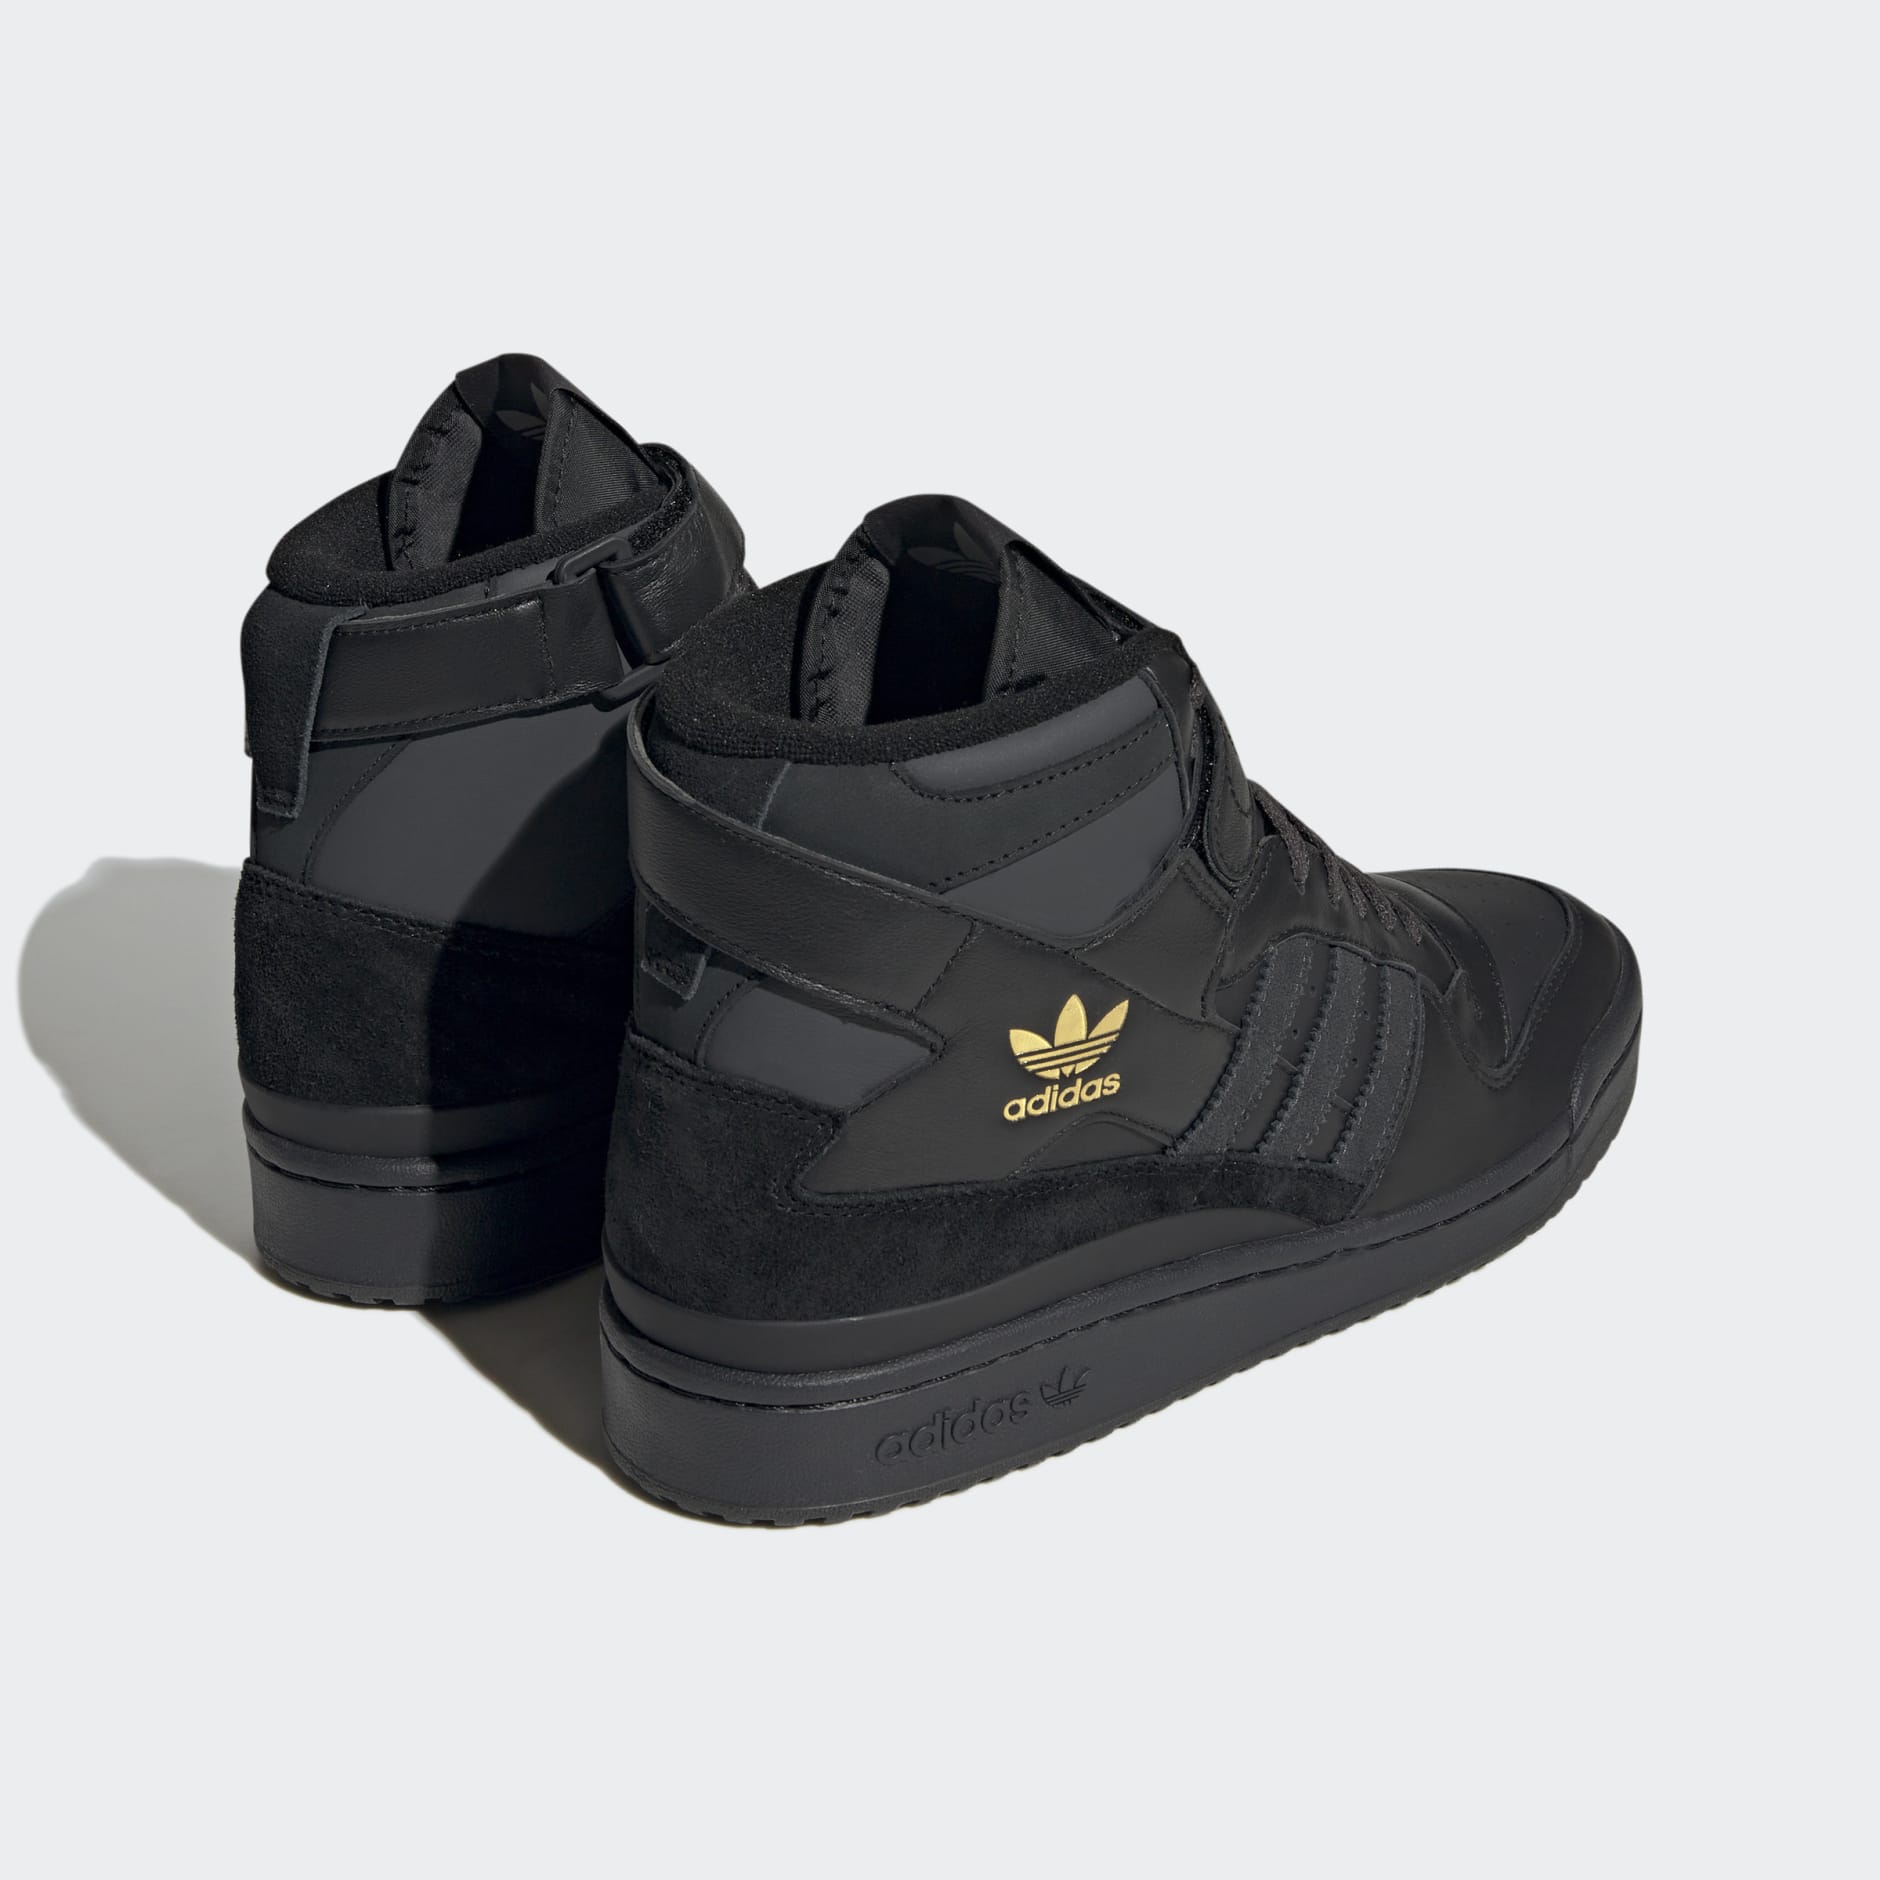 adidas Originals FORUM LOW UNISEX - Trainers - core black/grey six